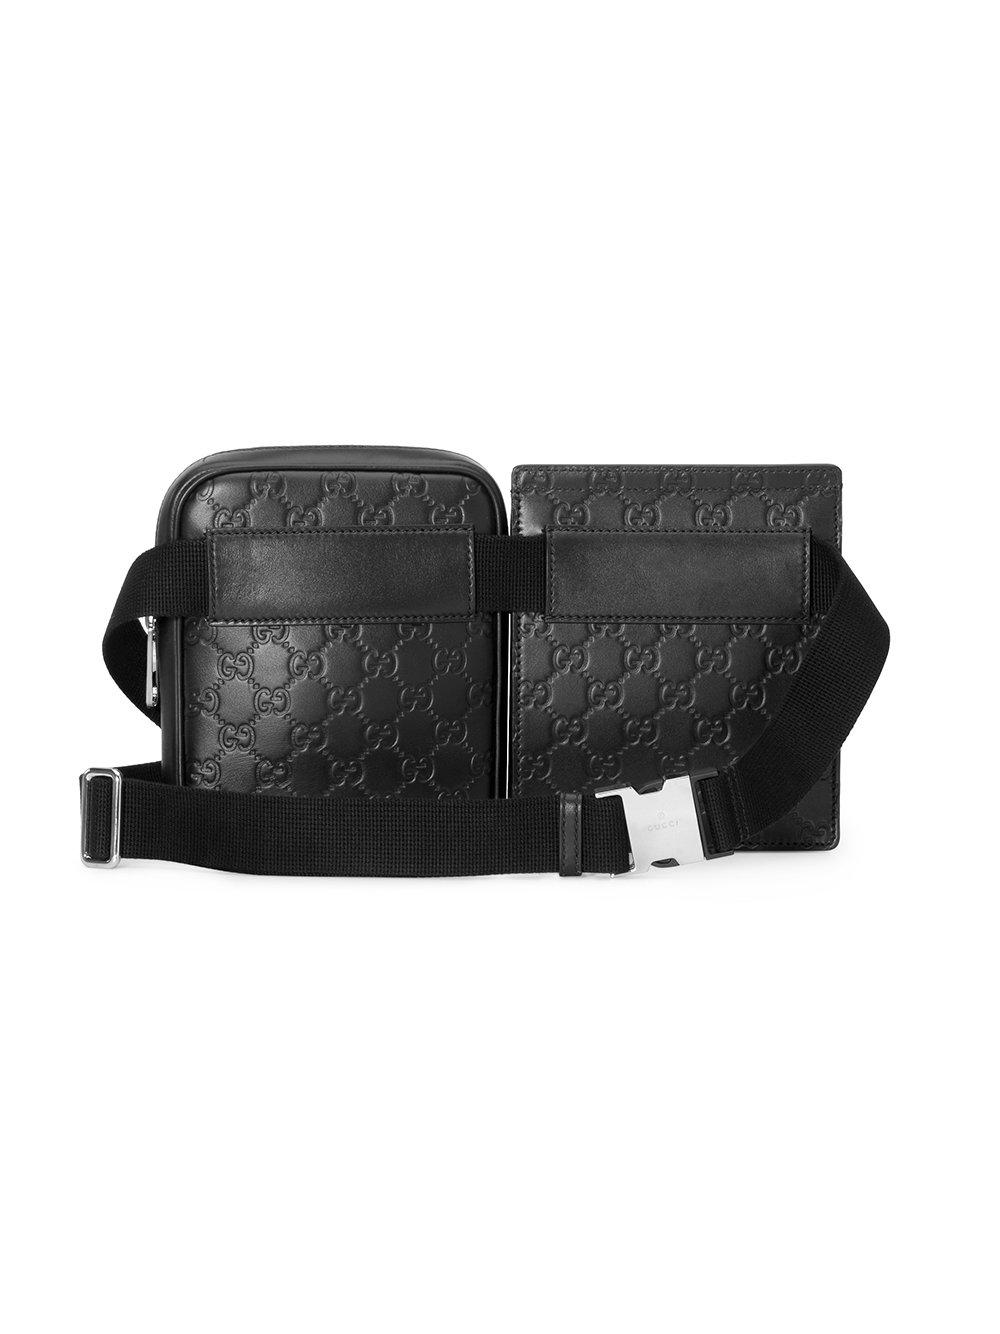 Gucci Leather Signature Belt Bag in 